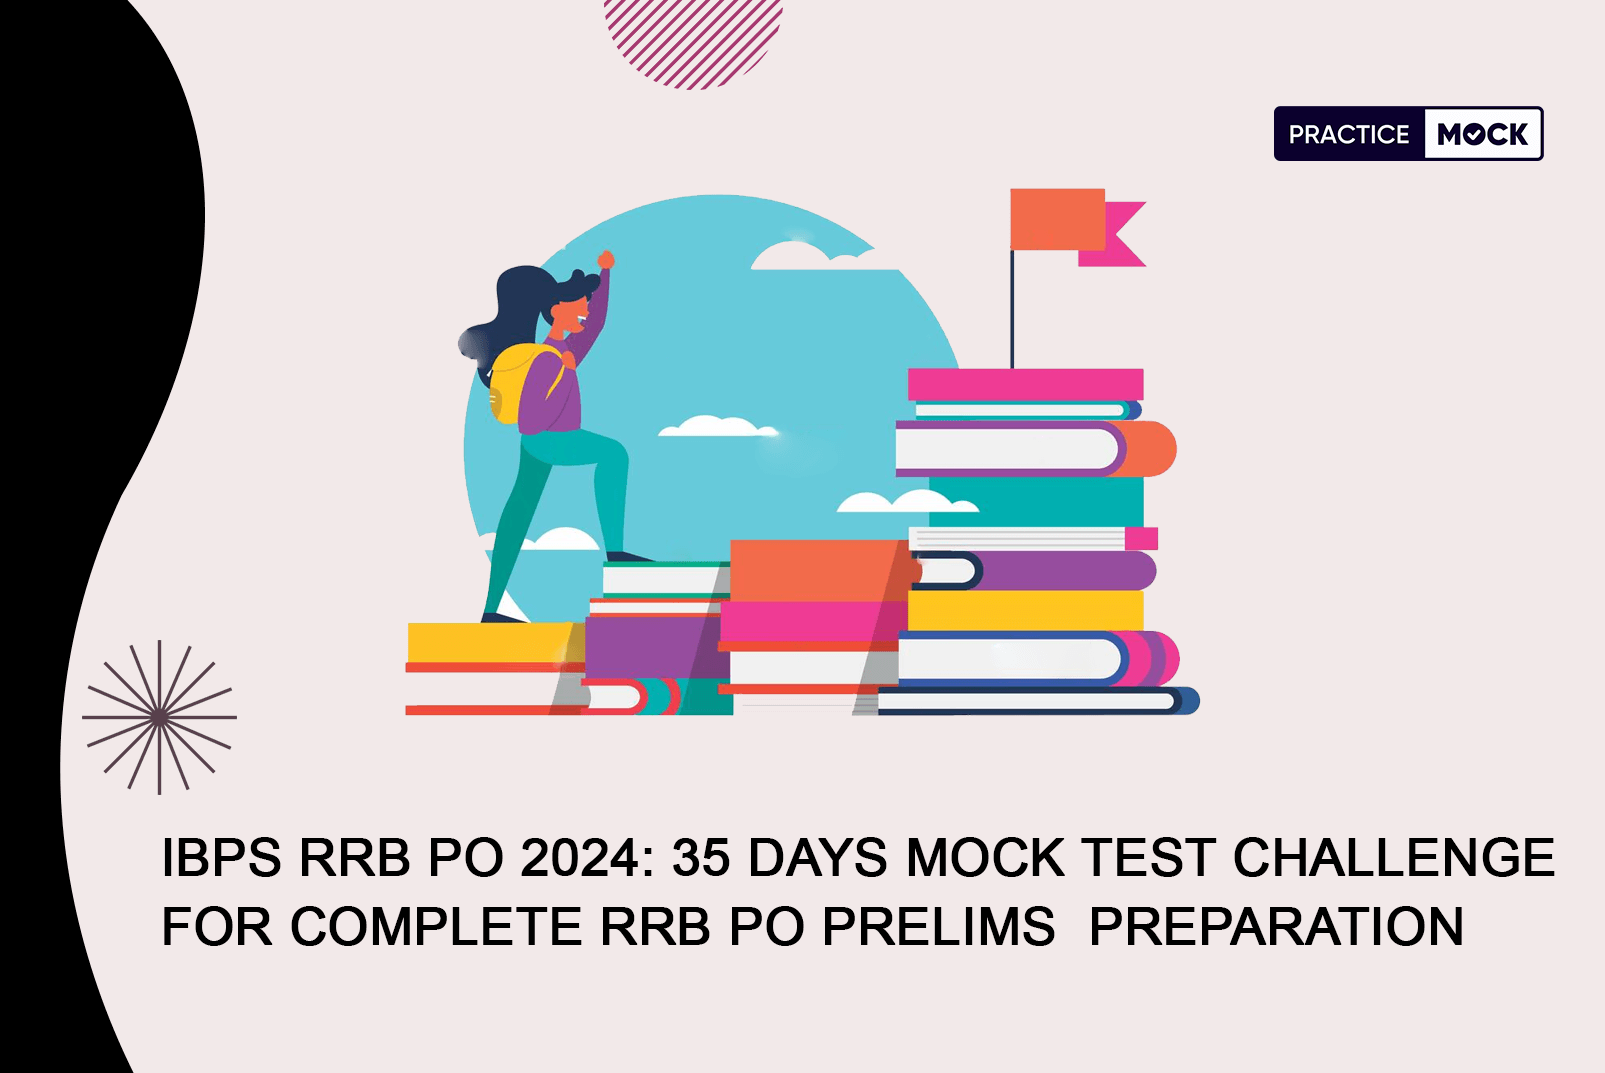 IBPS RRB PO 2024: 35 Days Mock Test Challenge for Complete RRB PO Prelims Preparation